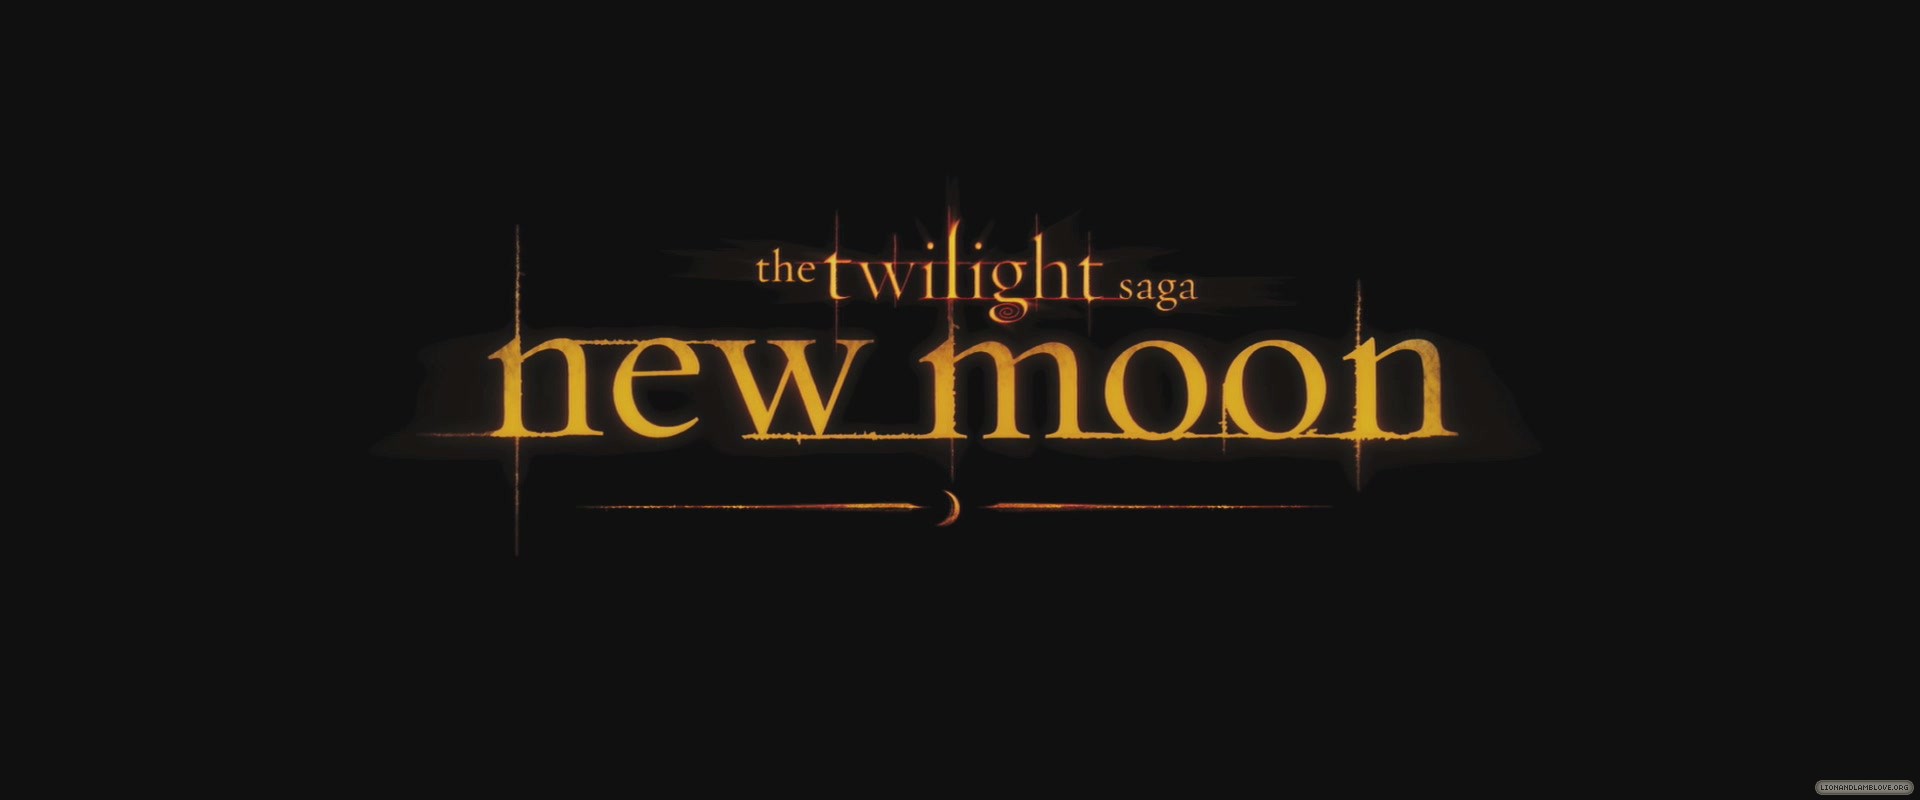 The Twilight Saga: New Moon Trailer on Mediacorp Channel 5 ...